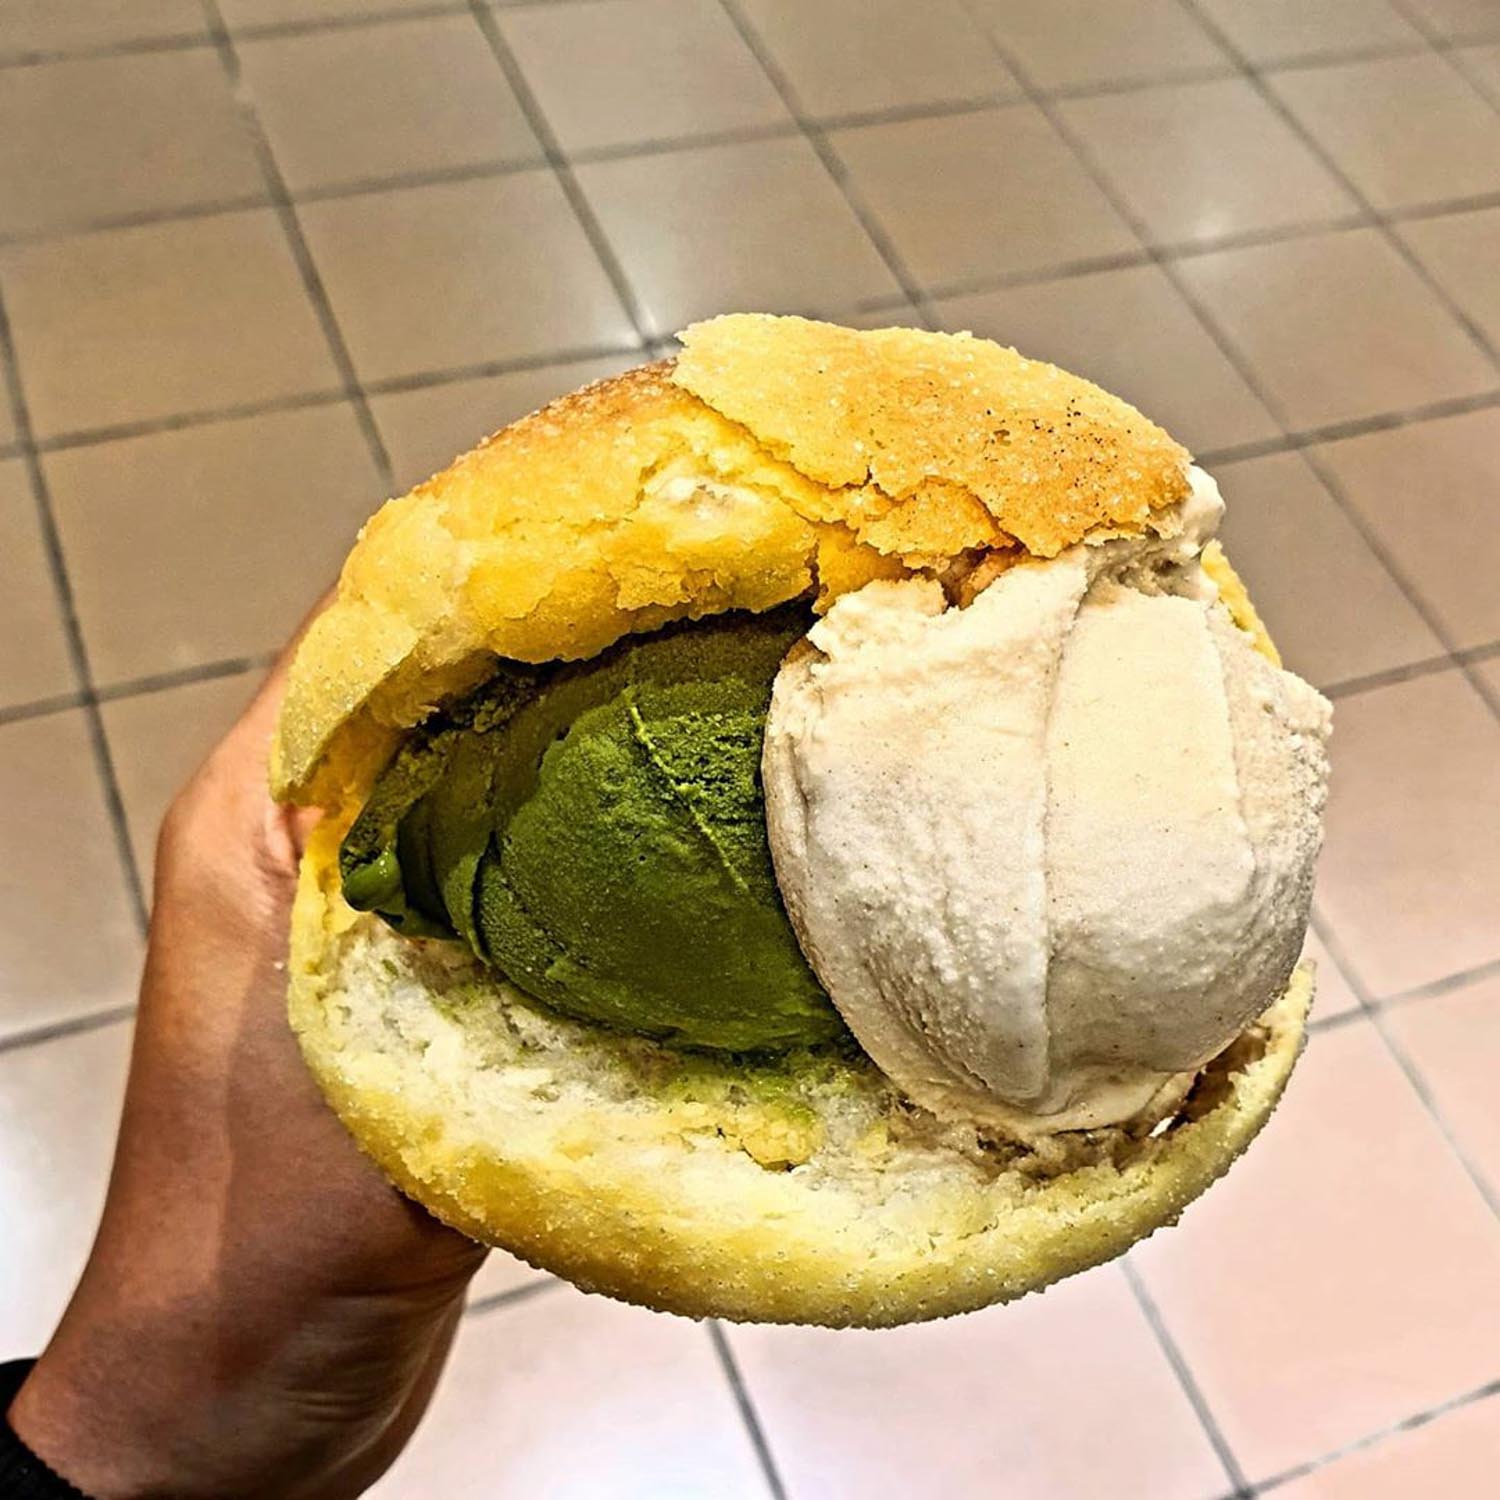 melon pan ice cream - azabu sabo x donq bakery melon pan ice cream sandwich